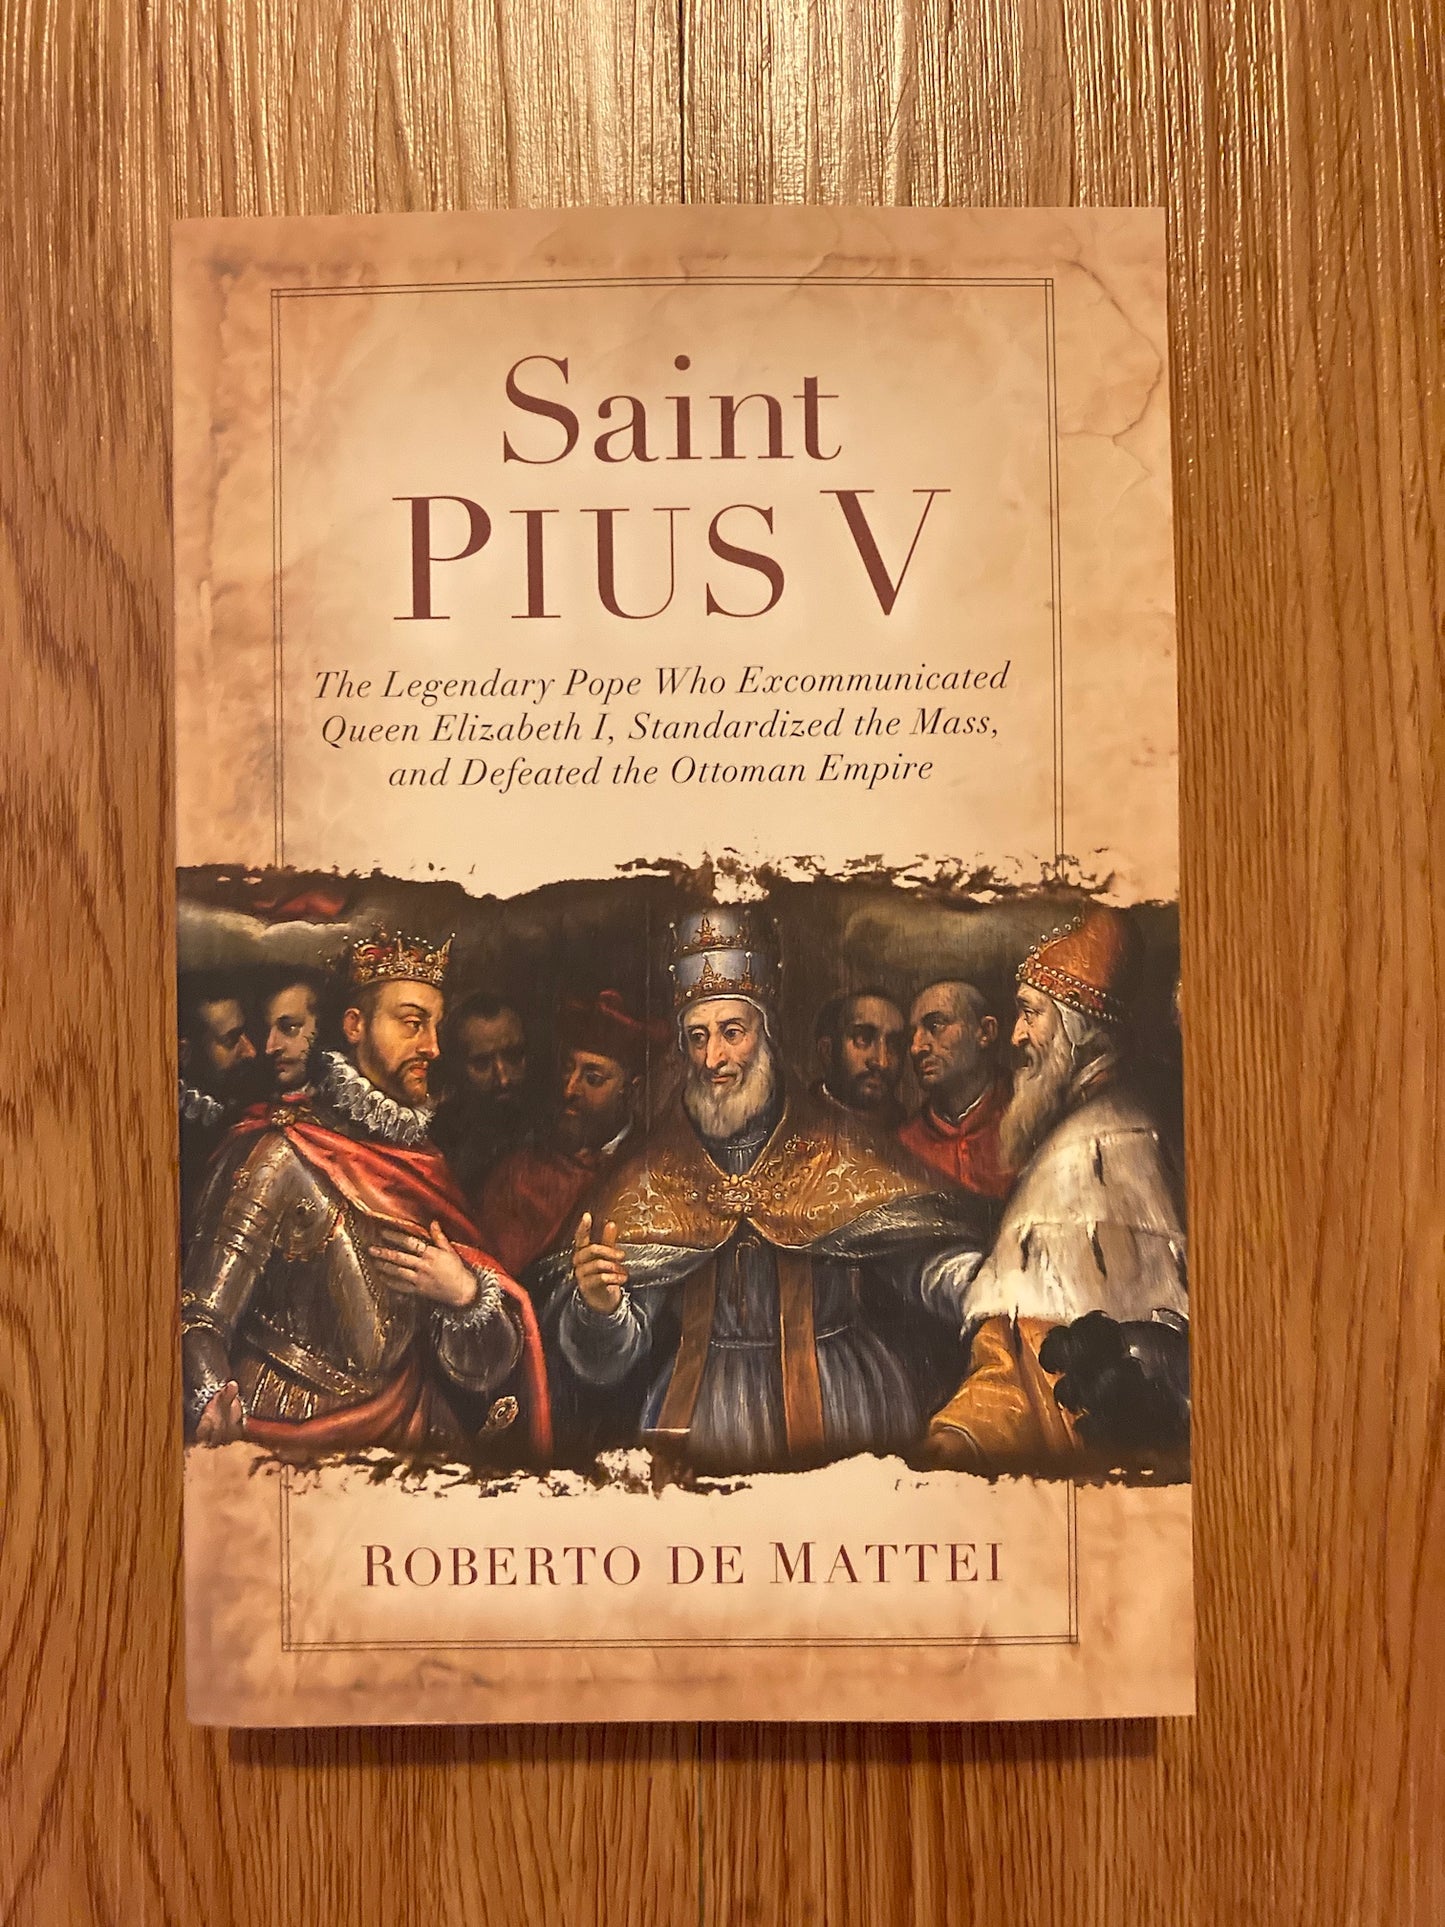 Saint Pius V: The Legendary Pope Who Excommunicated Queen Elizabeth I